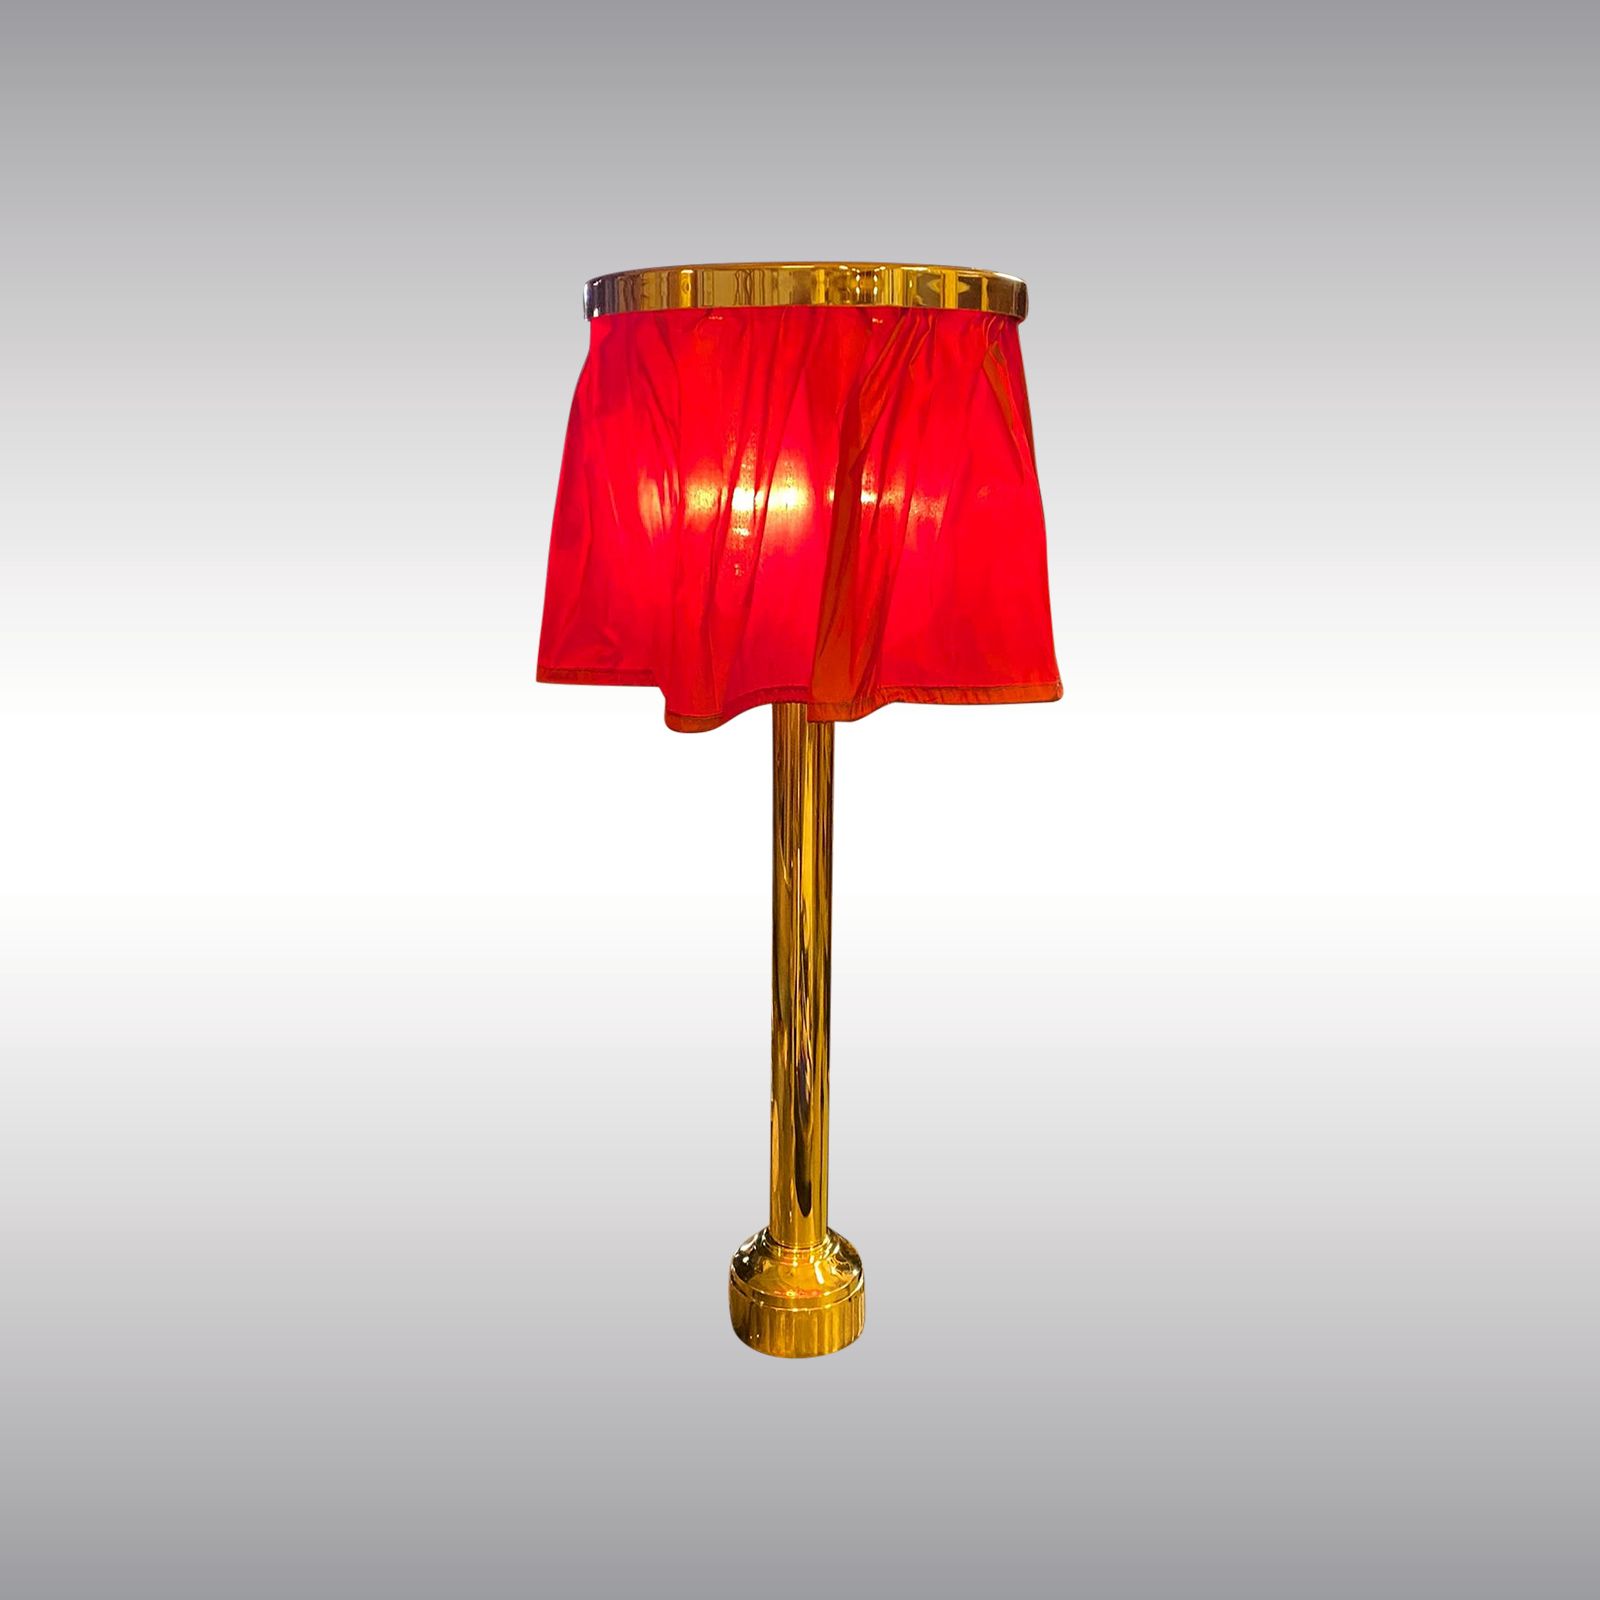 WOKA LAMPS VIENNA - OrderNr.: 22205|Adolf Loos Version for Bar Mounting - Design: Adolf Loos